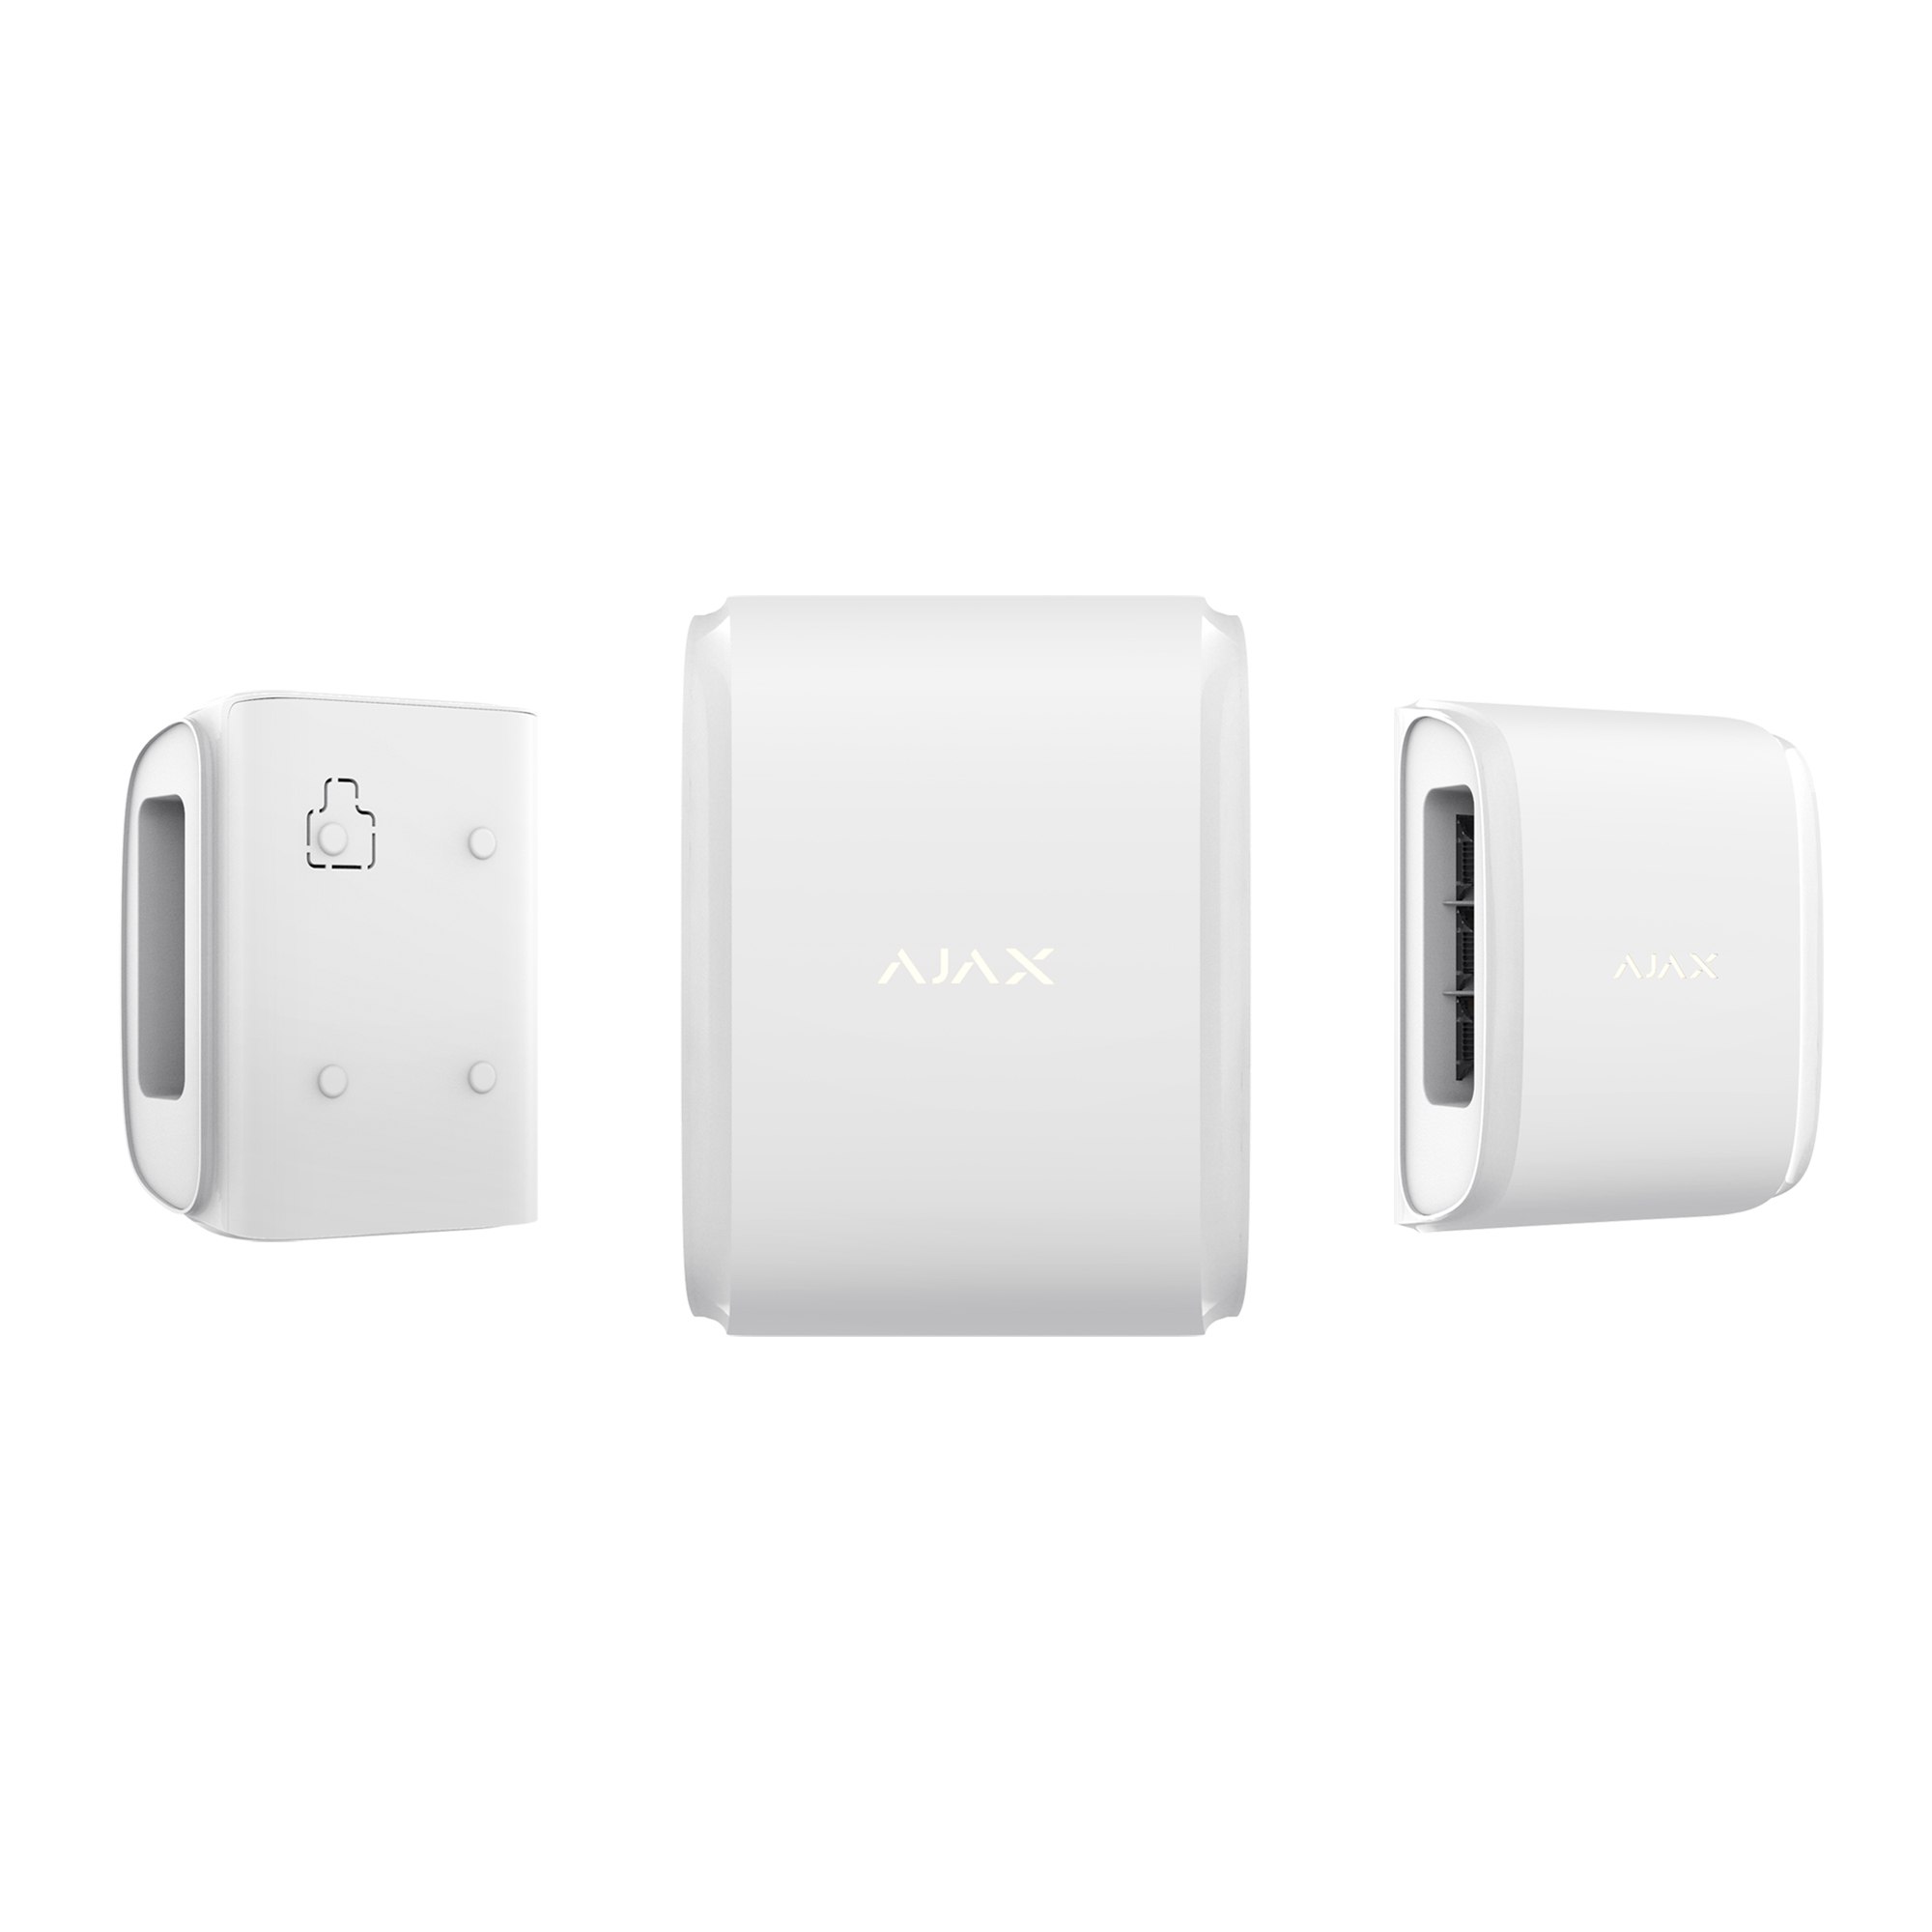 AJAX DualCurtain Outdoor - Vezeték nélküli, kültéri kétirányú függönyinfra